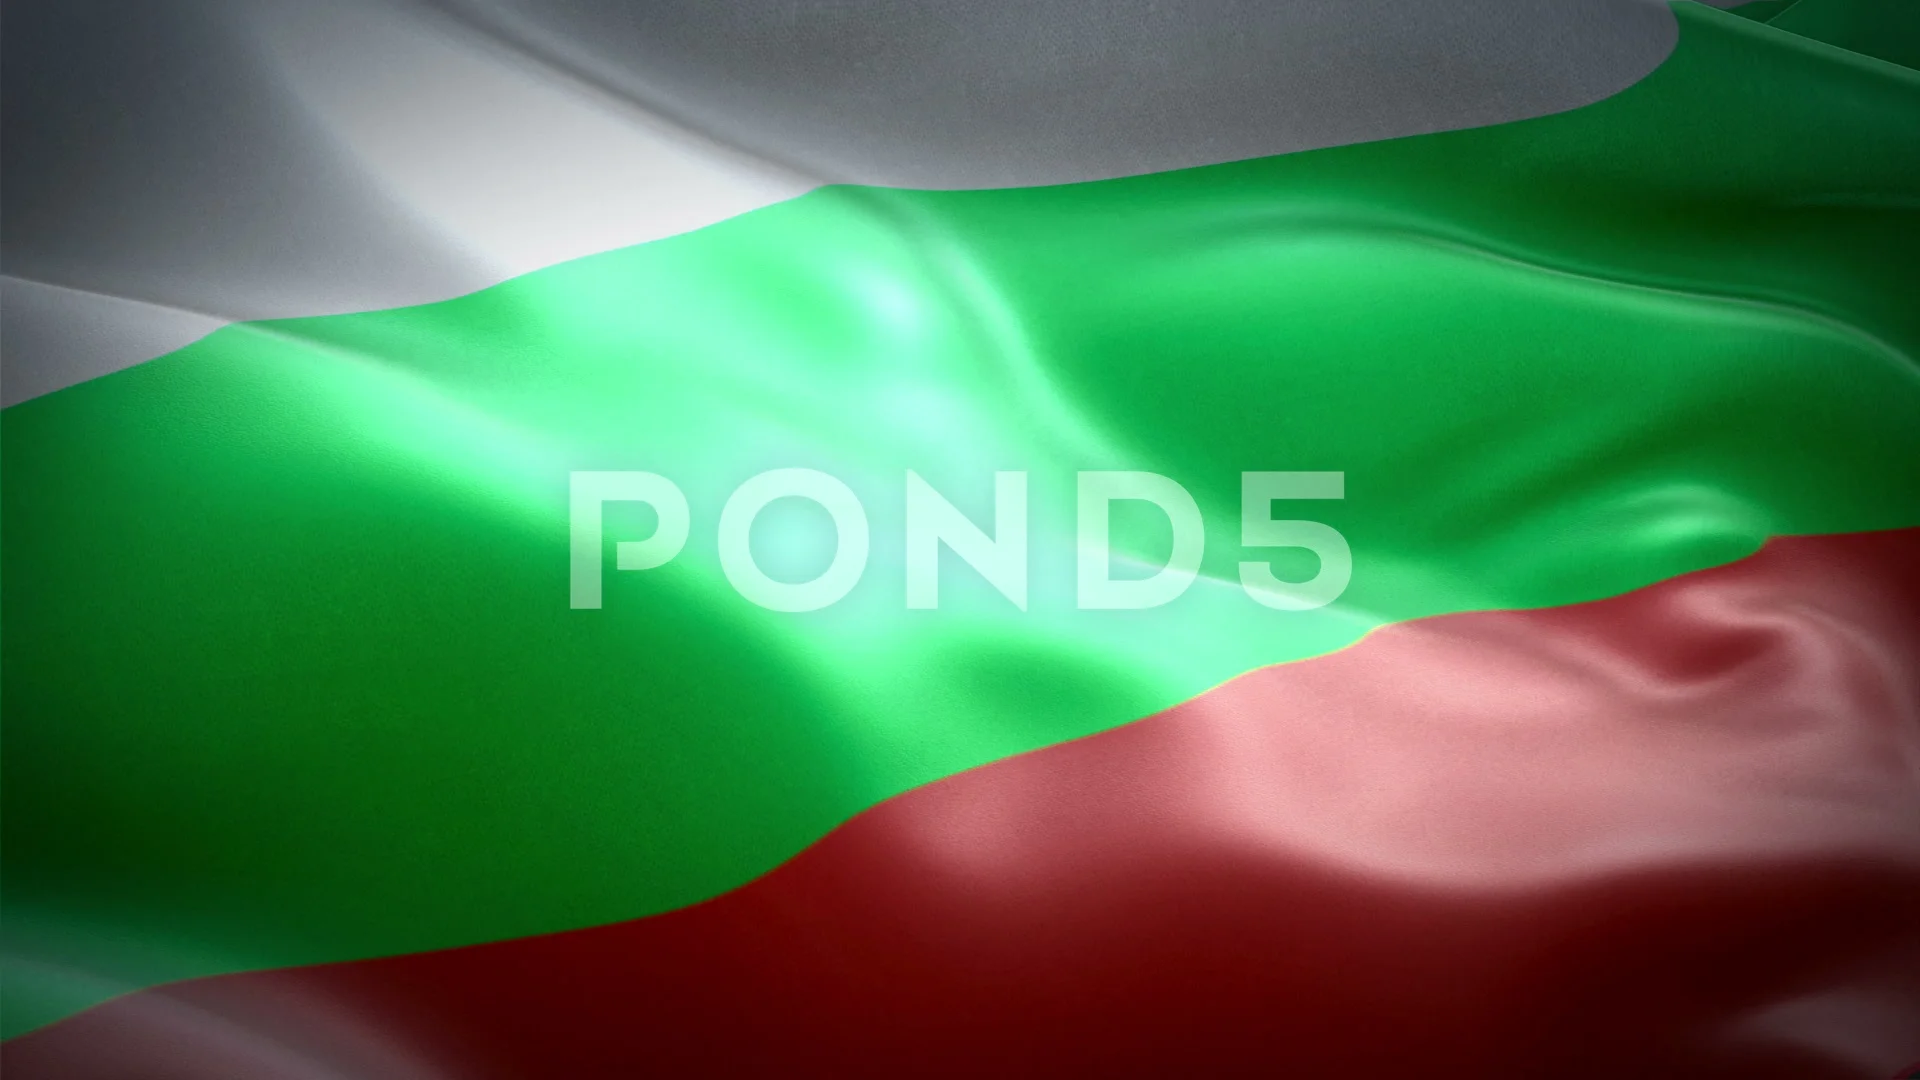 bulgarian flag gif